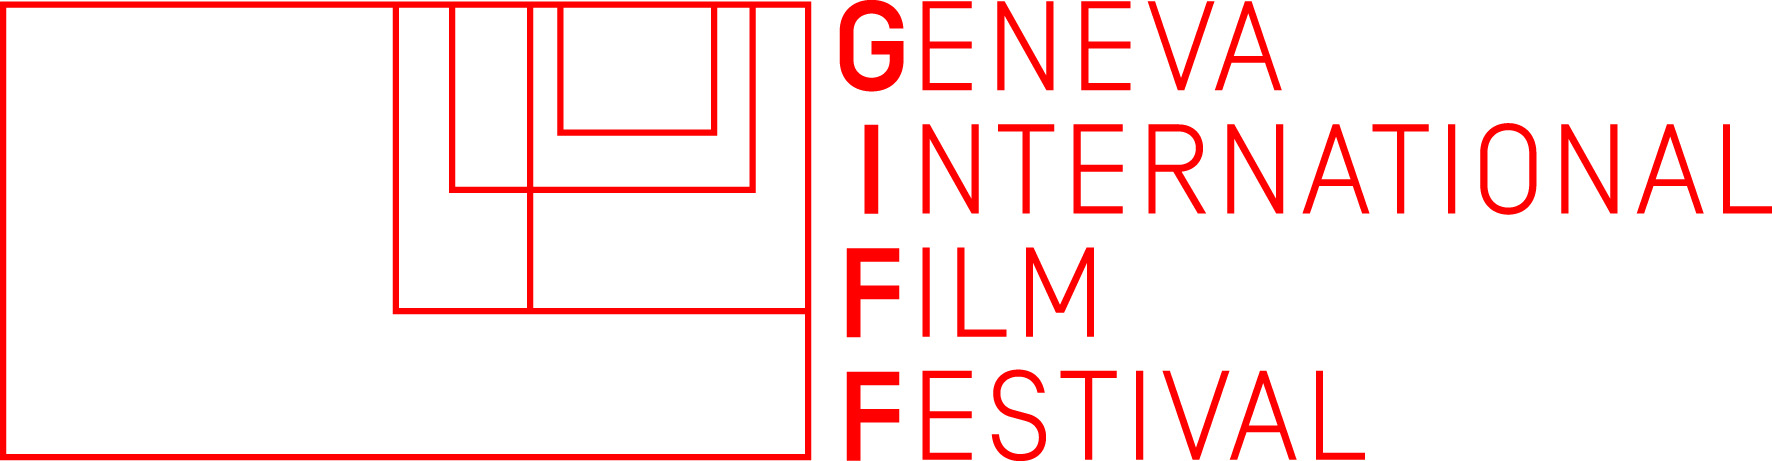 Gevena International Film Festival Logo